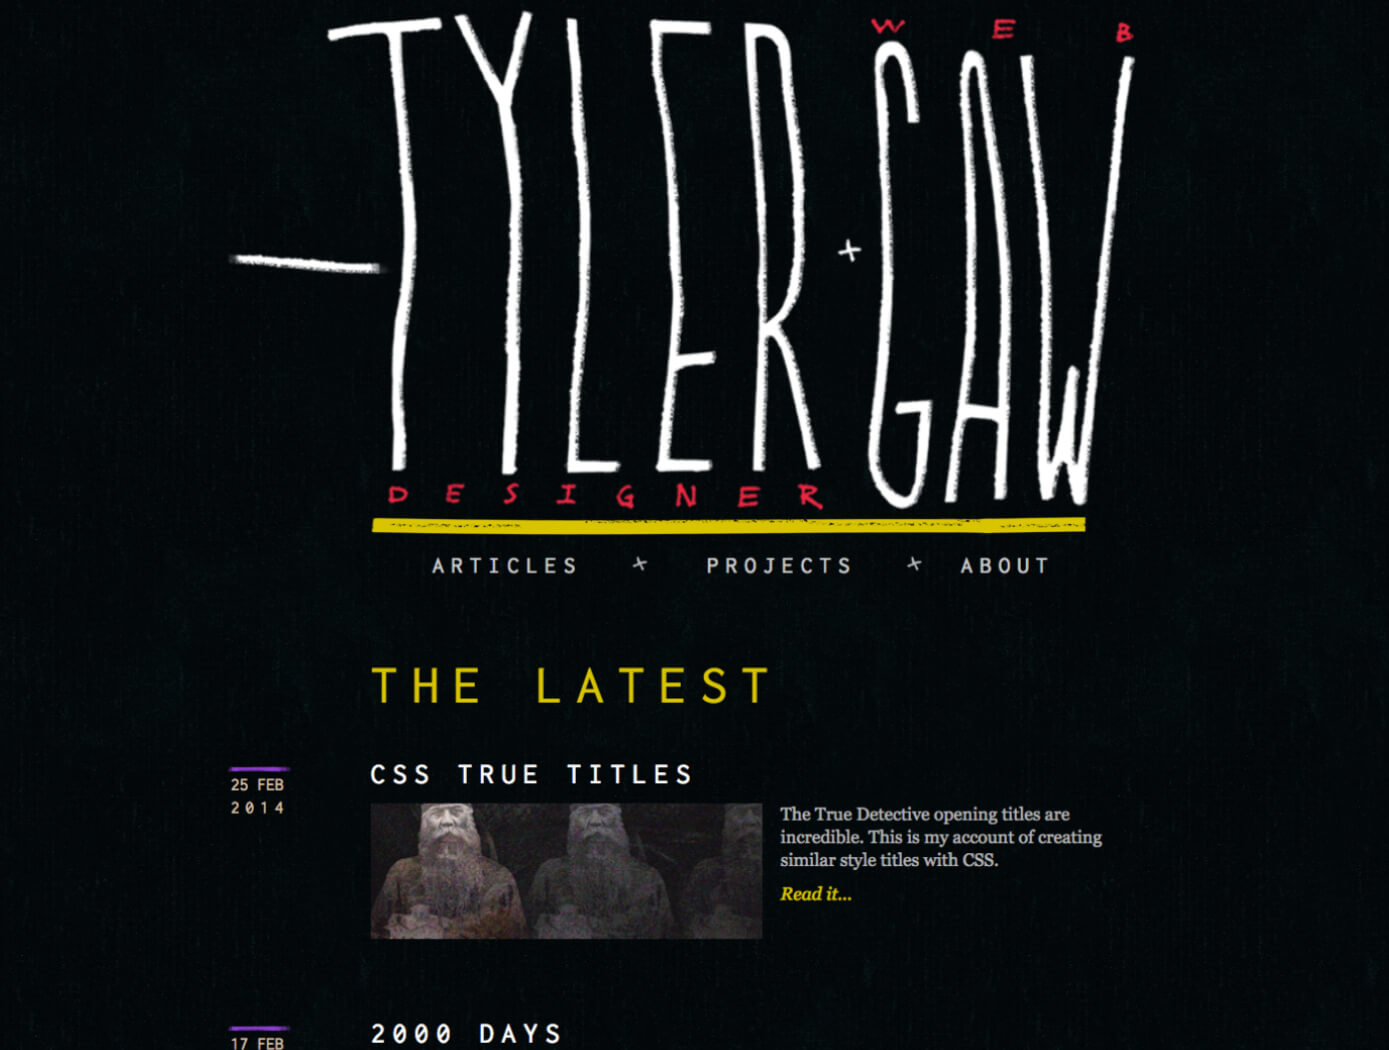 A screenshot of version 4 of tylergaw.com